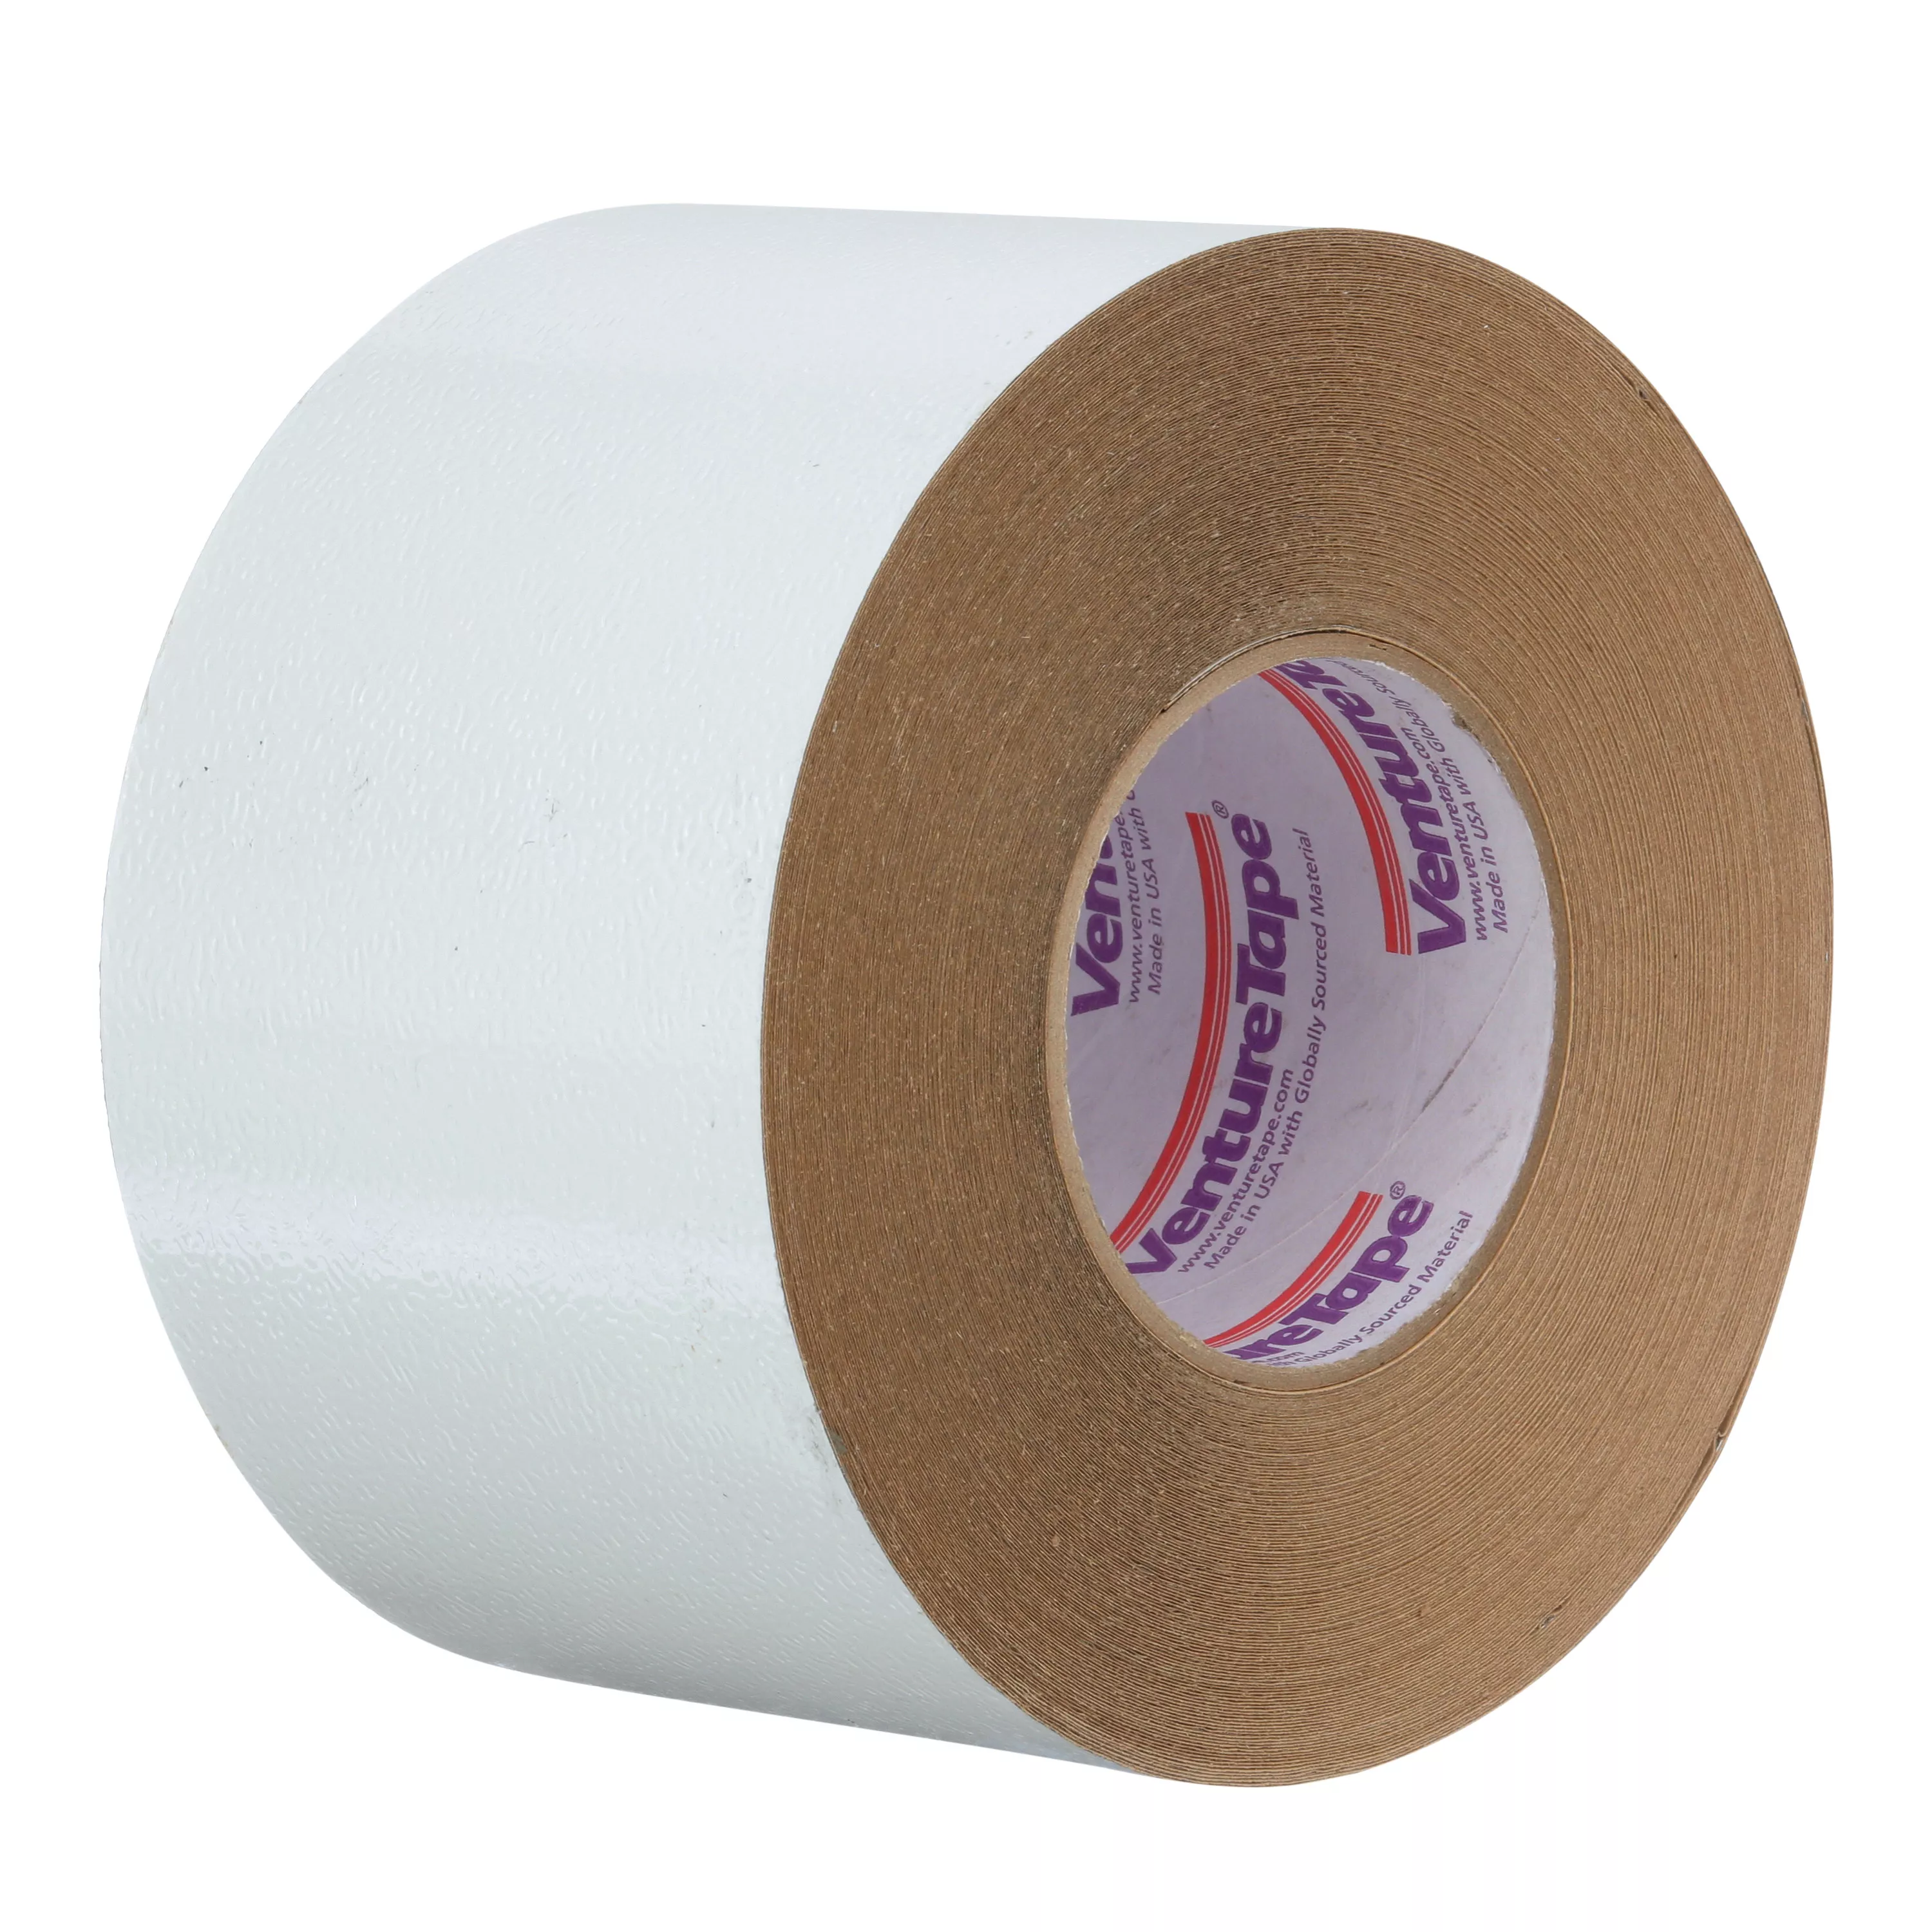 3M™ VentureClad™ Insulation Jacketing Tape 1577CW-WME, White, 4 in x 50
yd, 4 Rolls/Case